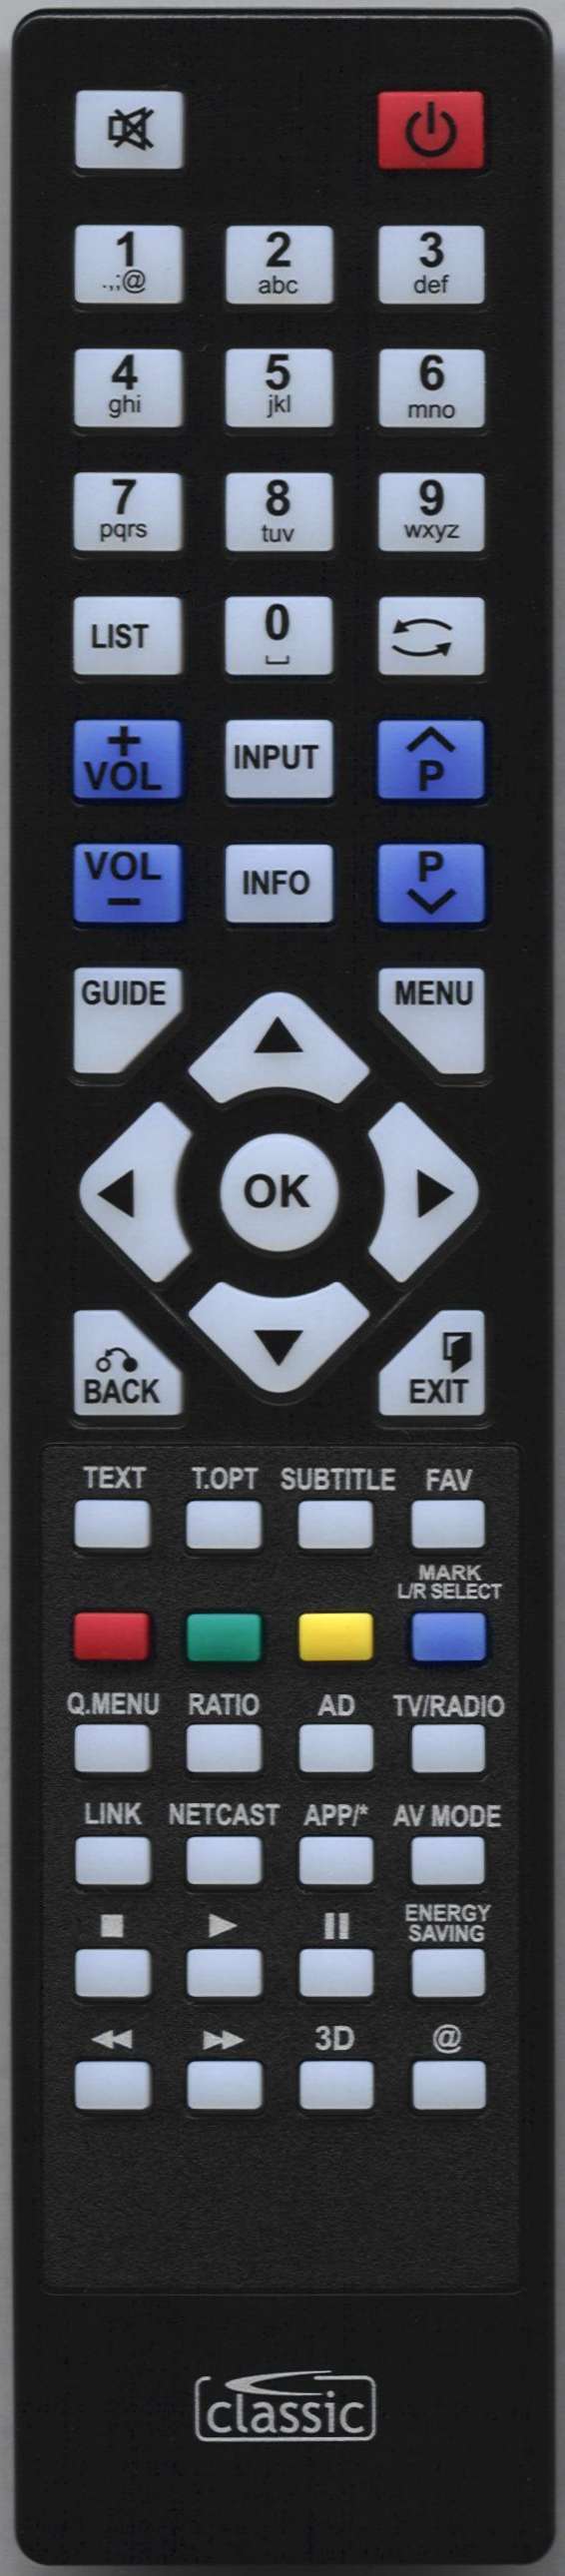 LG 42LD450 Remote Control Alternative